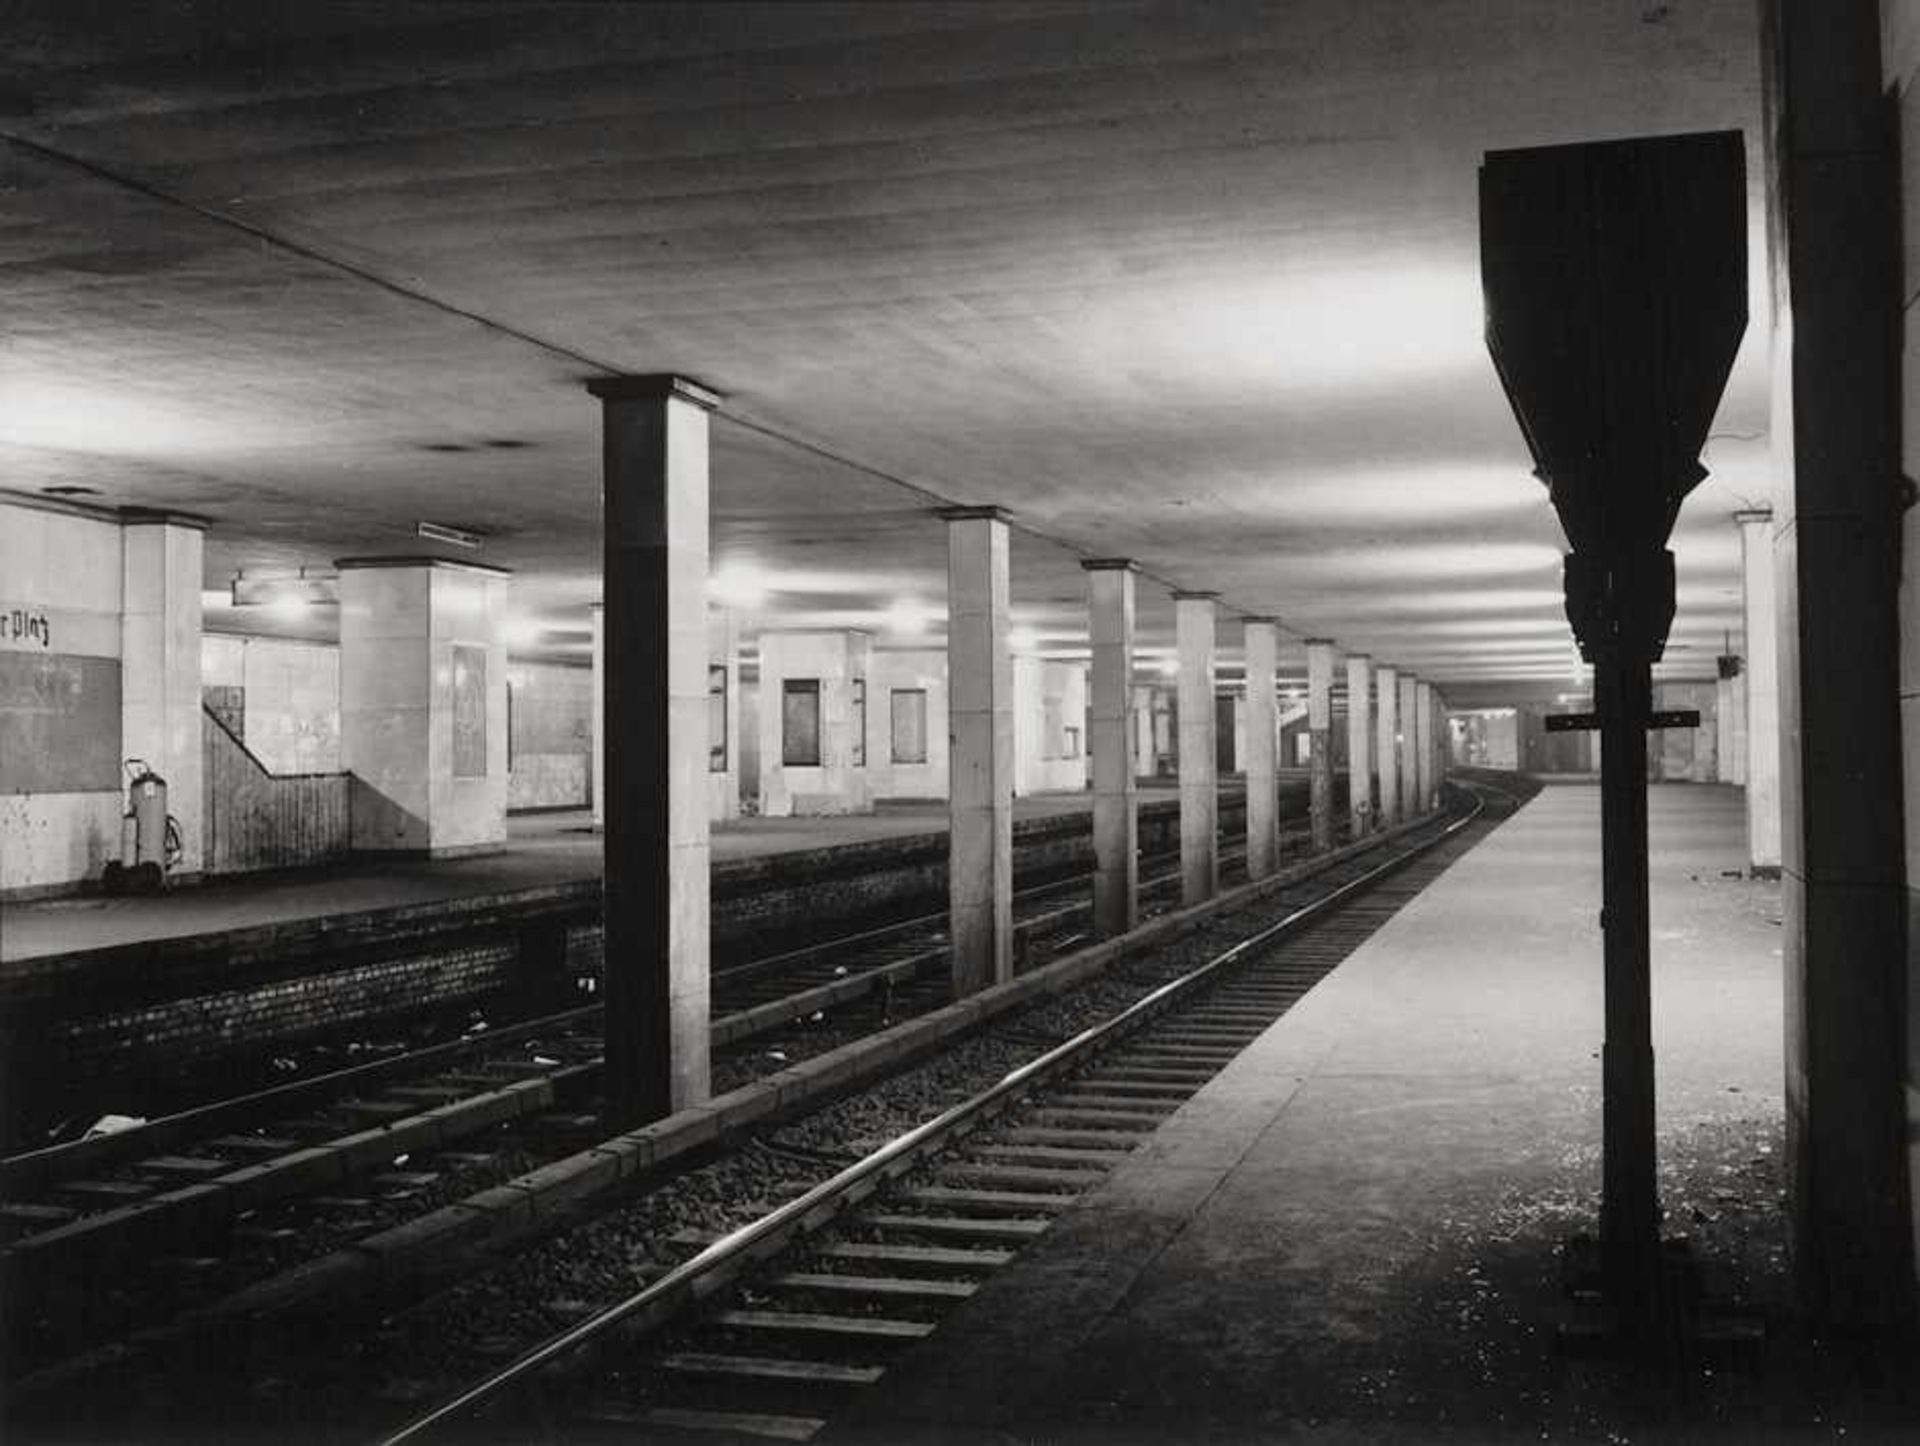 Paris, Robert: S-Bahnhof Potsdamer PlatzS-Bahnhof Potsdamer Platz. 1990. Gelatin silver print. 30,